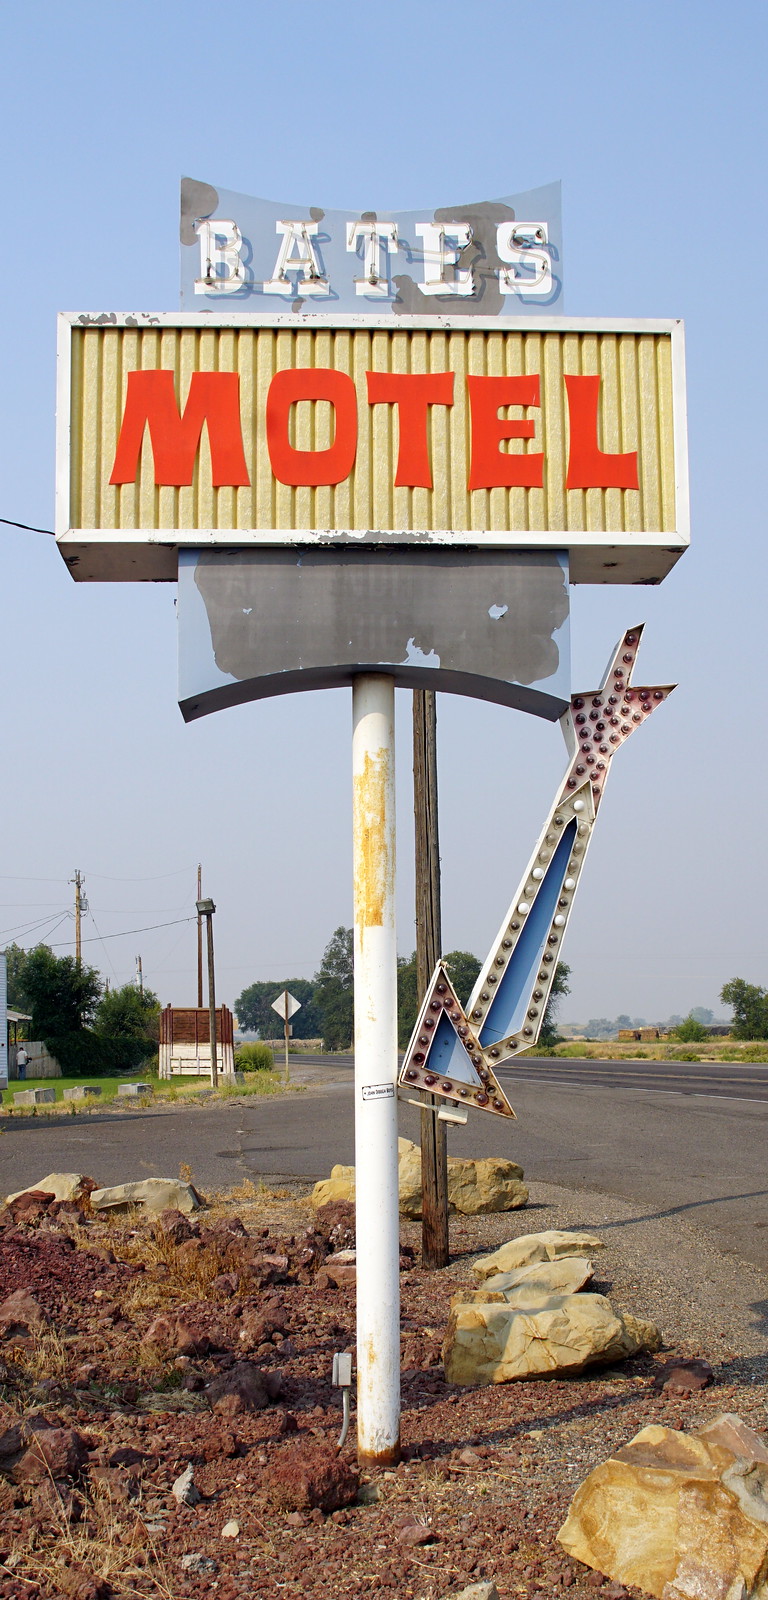 Bates Motel - 1101 A Street West, Vale, Oregon U.S.A. - August 23, 2015